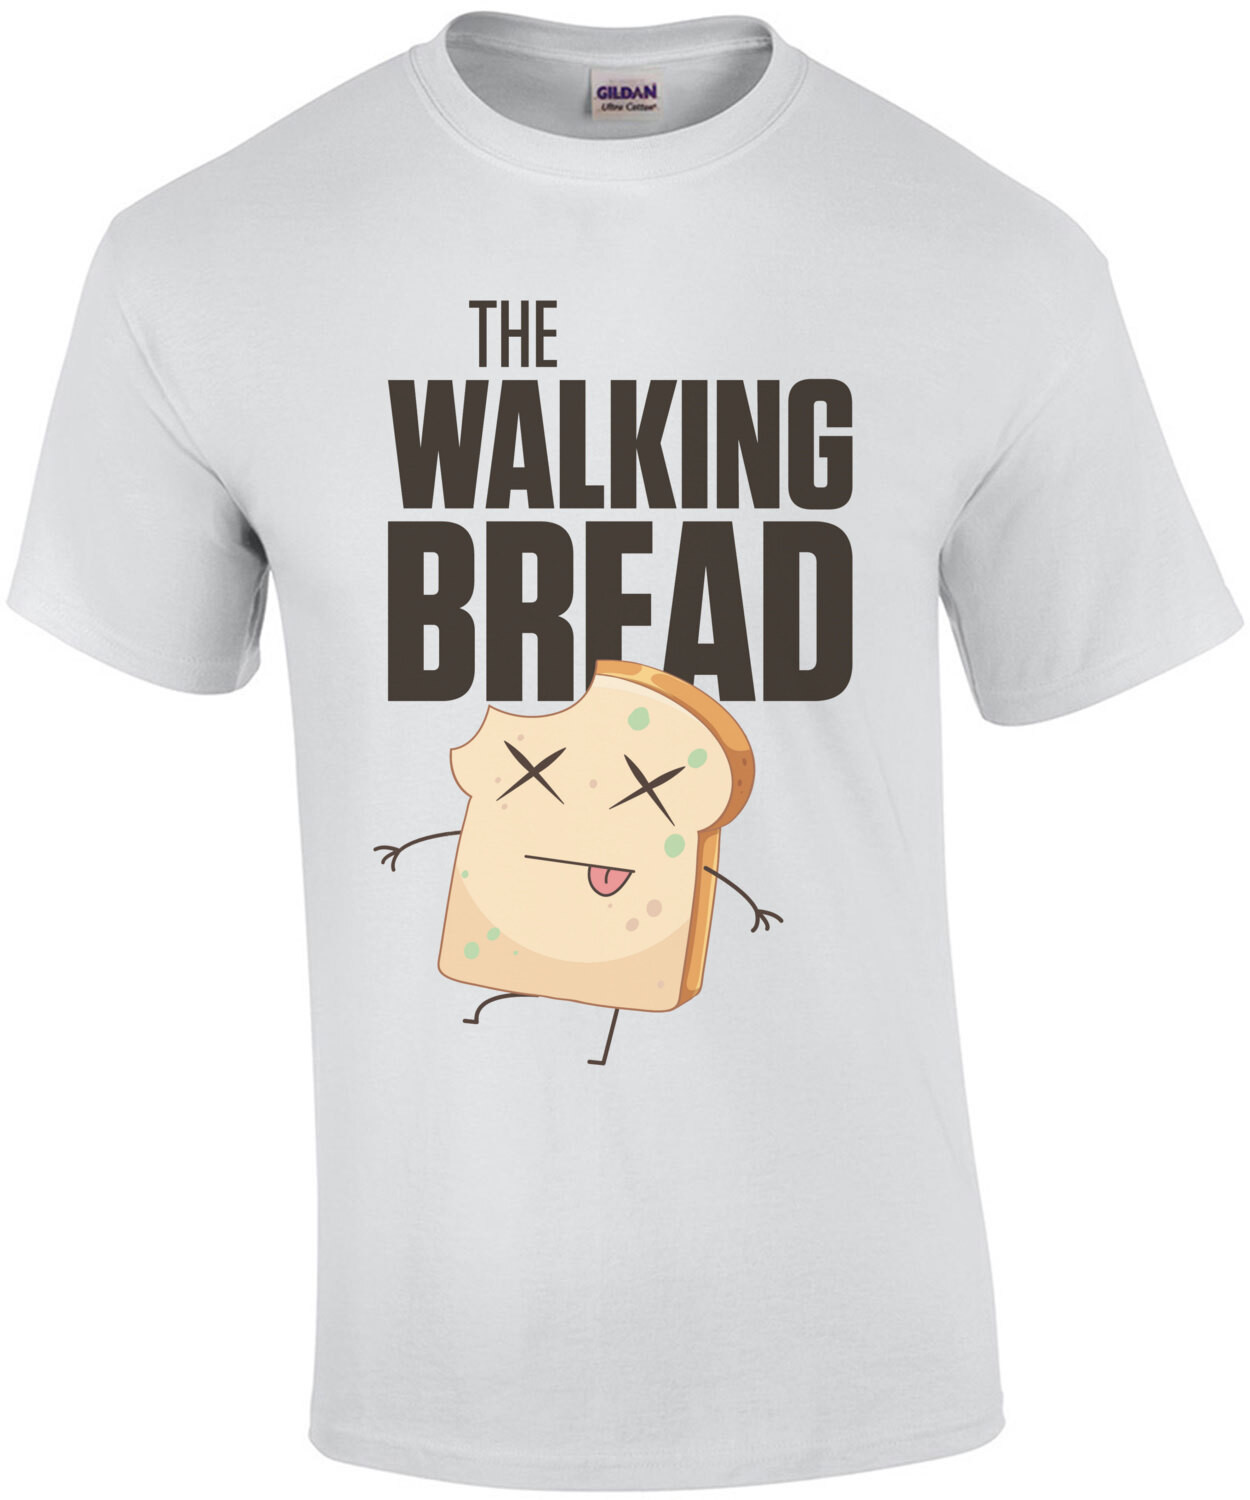 The walking bread - the walking dead parody pun t-shirt